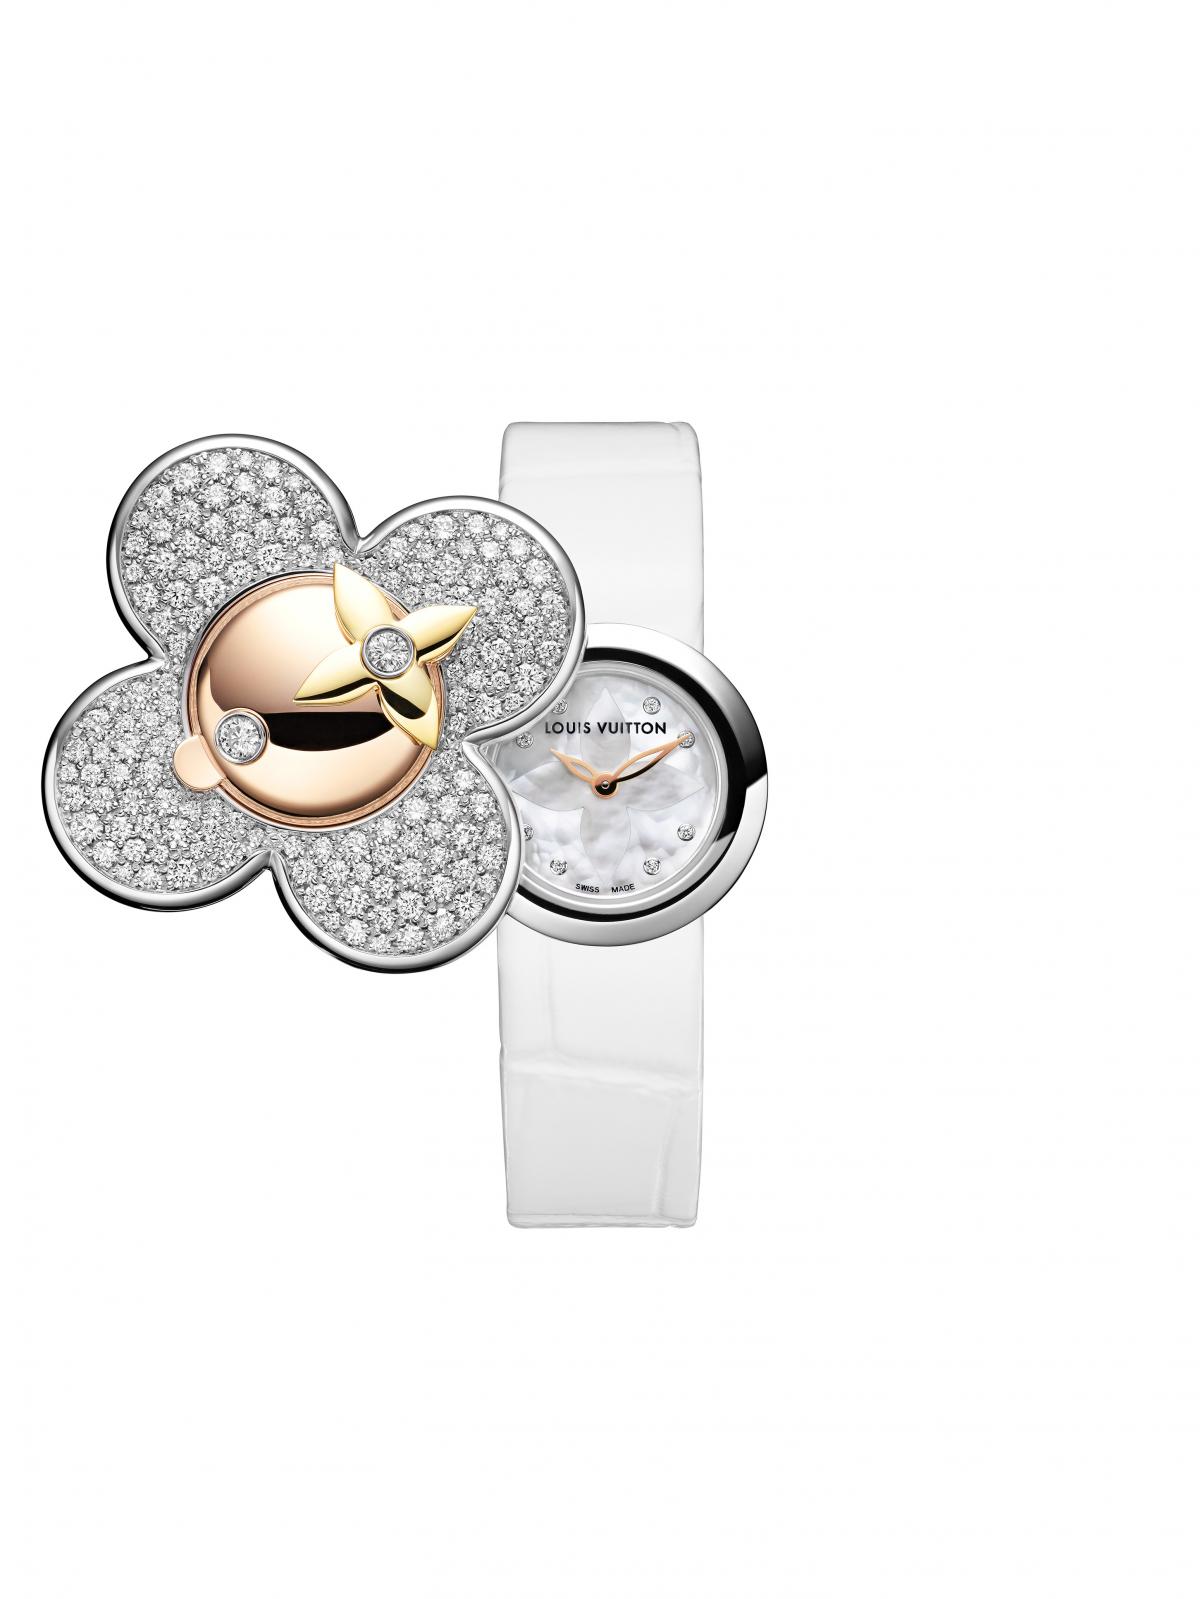 The Gold Centre - Lovely Louis Vuitton watch box with a serious collection  inside 🥵 #rolex #money #watch #watches #watchesandwonders2021  #watchthisspace #watchesofinstagram #watchtraderuk #watchcollector #watches  #watchoftheday #watchgroup